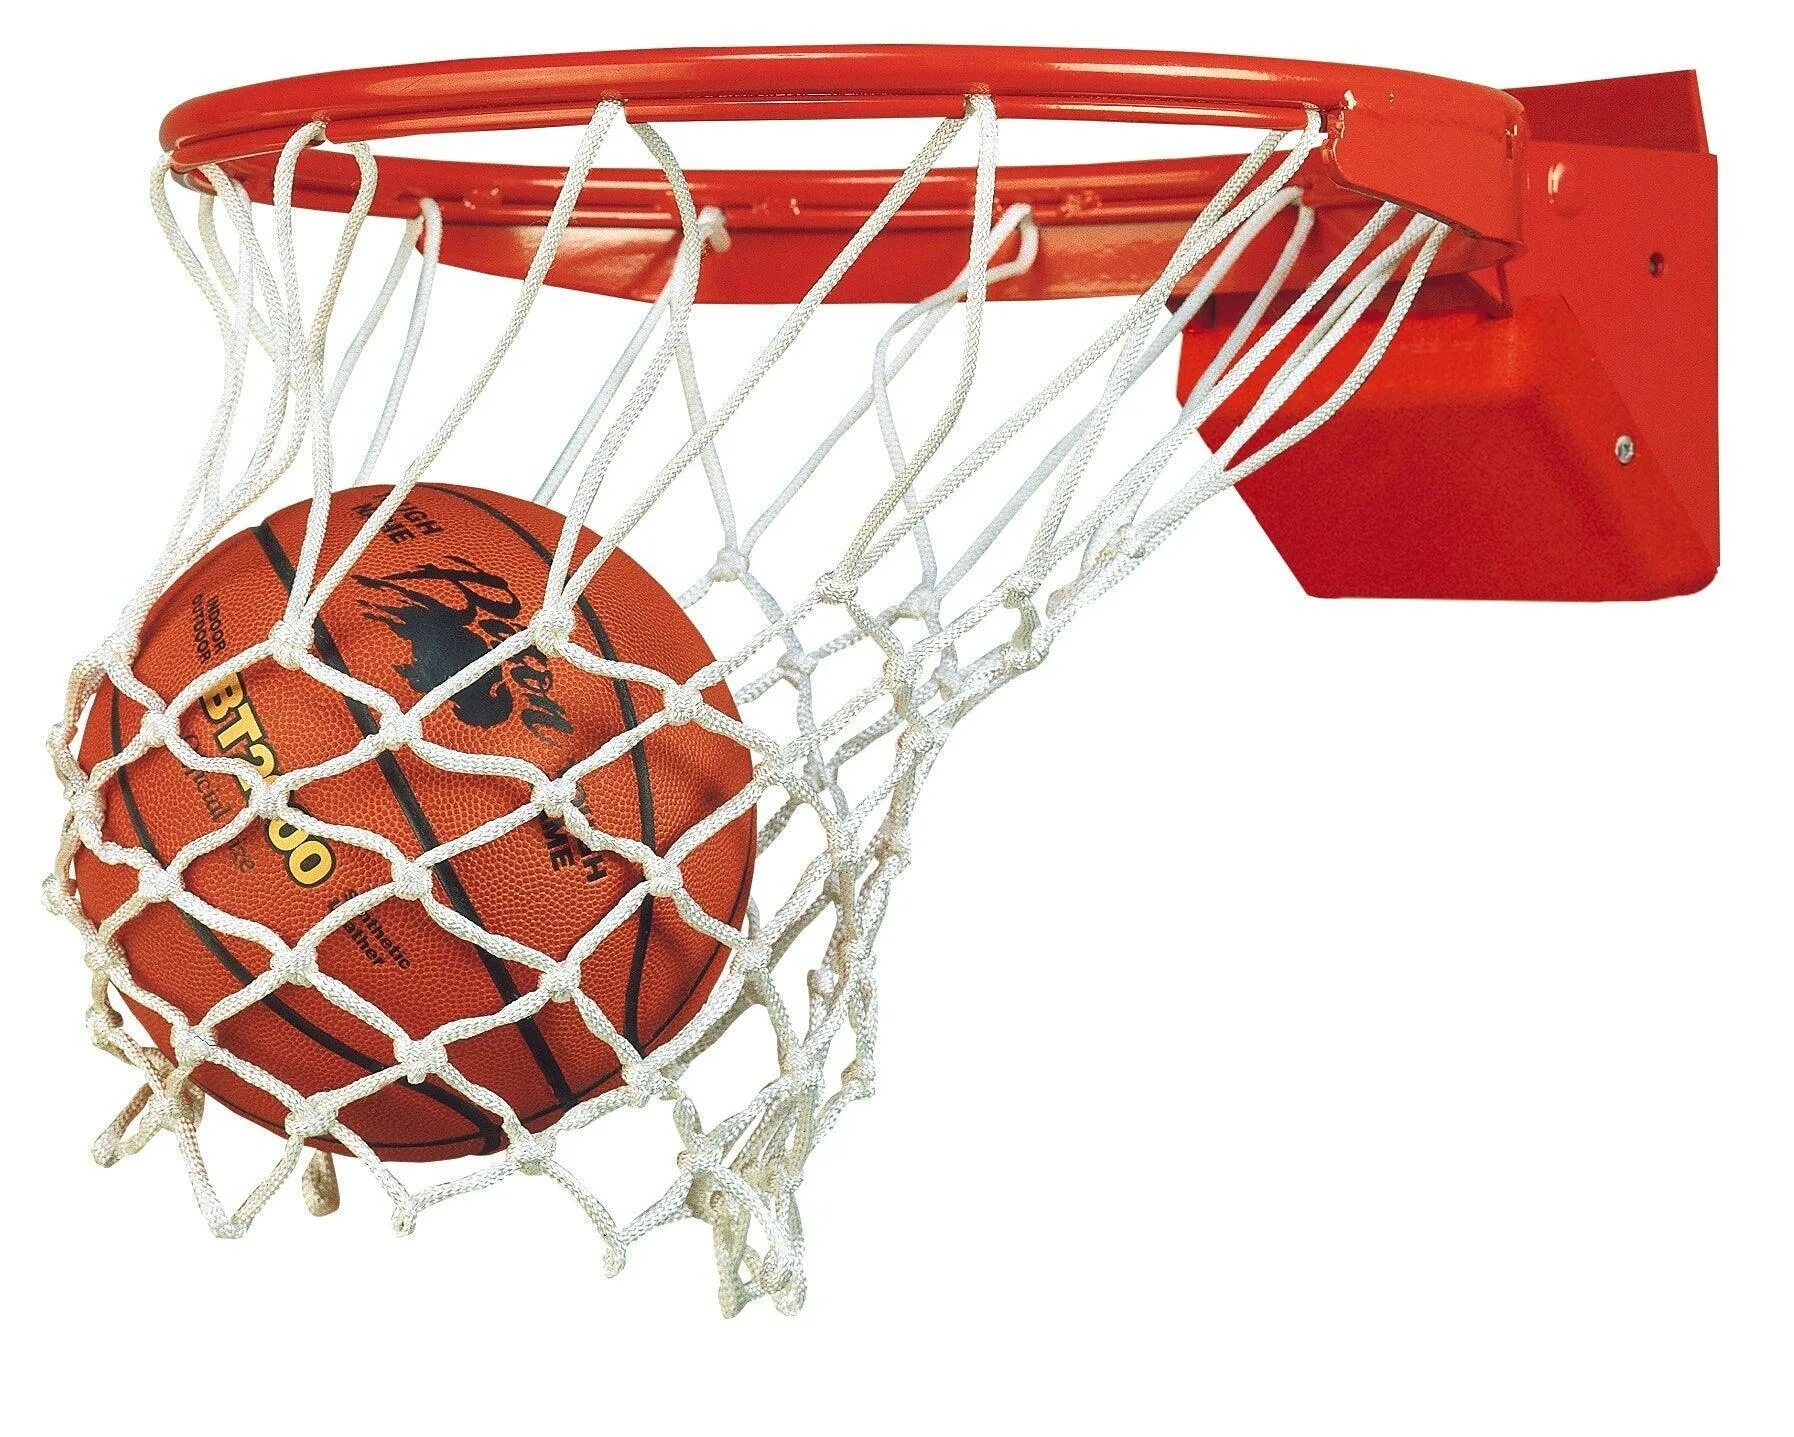 Корзина баскетбольная большая. Корзина для баскетбола. Баскетбольное кольцо. Баскетбольное кольцо сверху. Баскетбольная сетка.